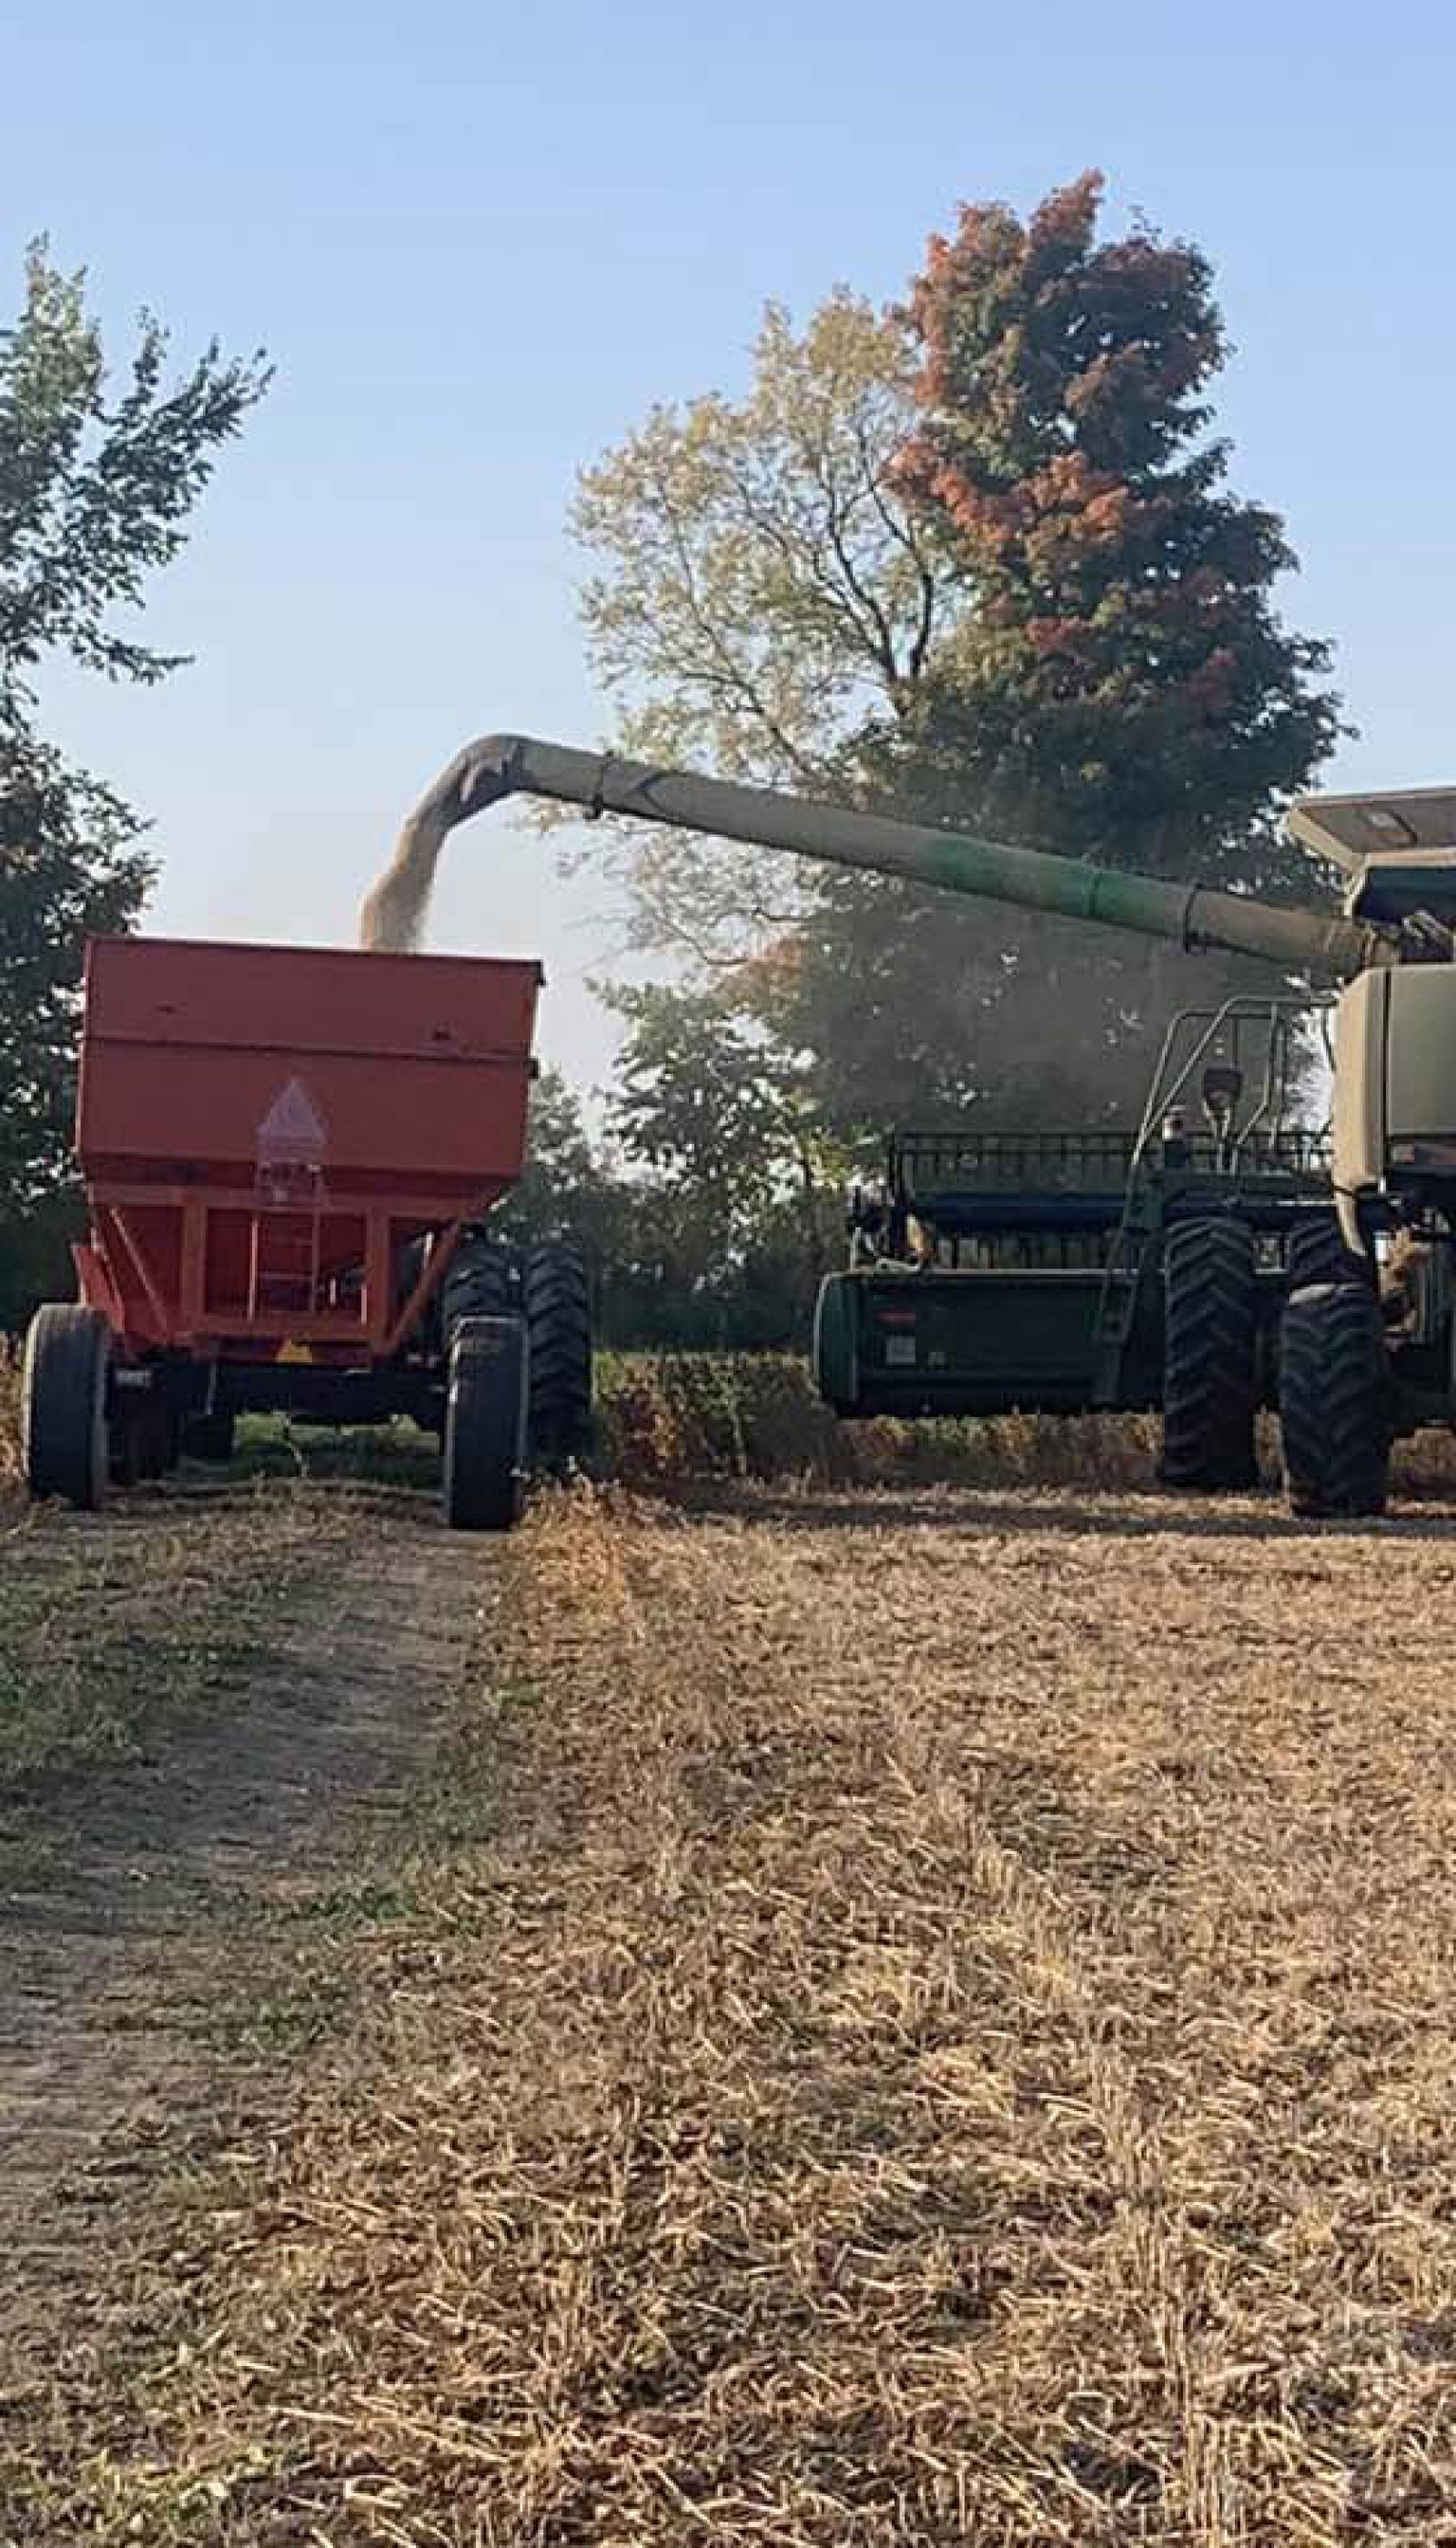 Harvex harvesting equipment at wheat field